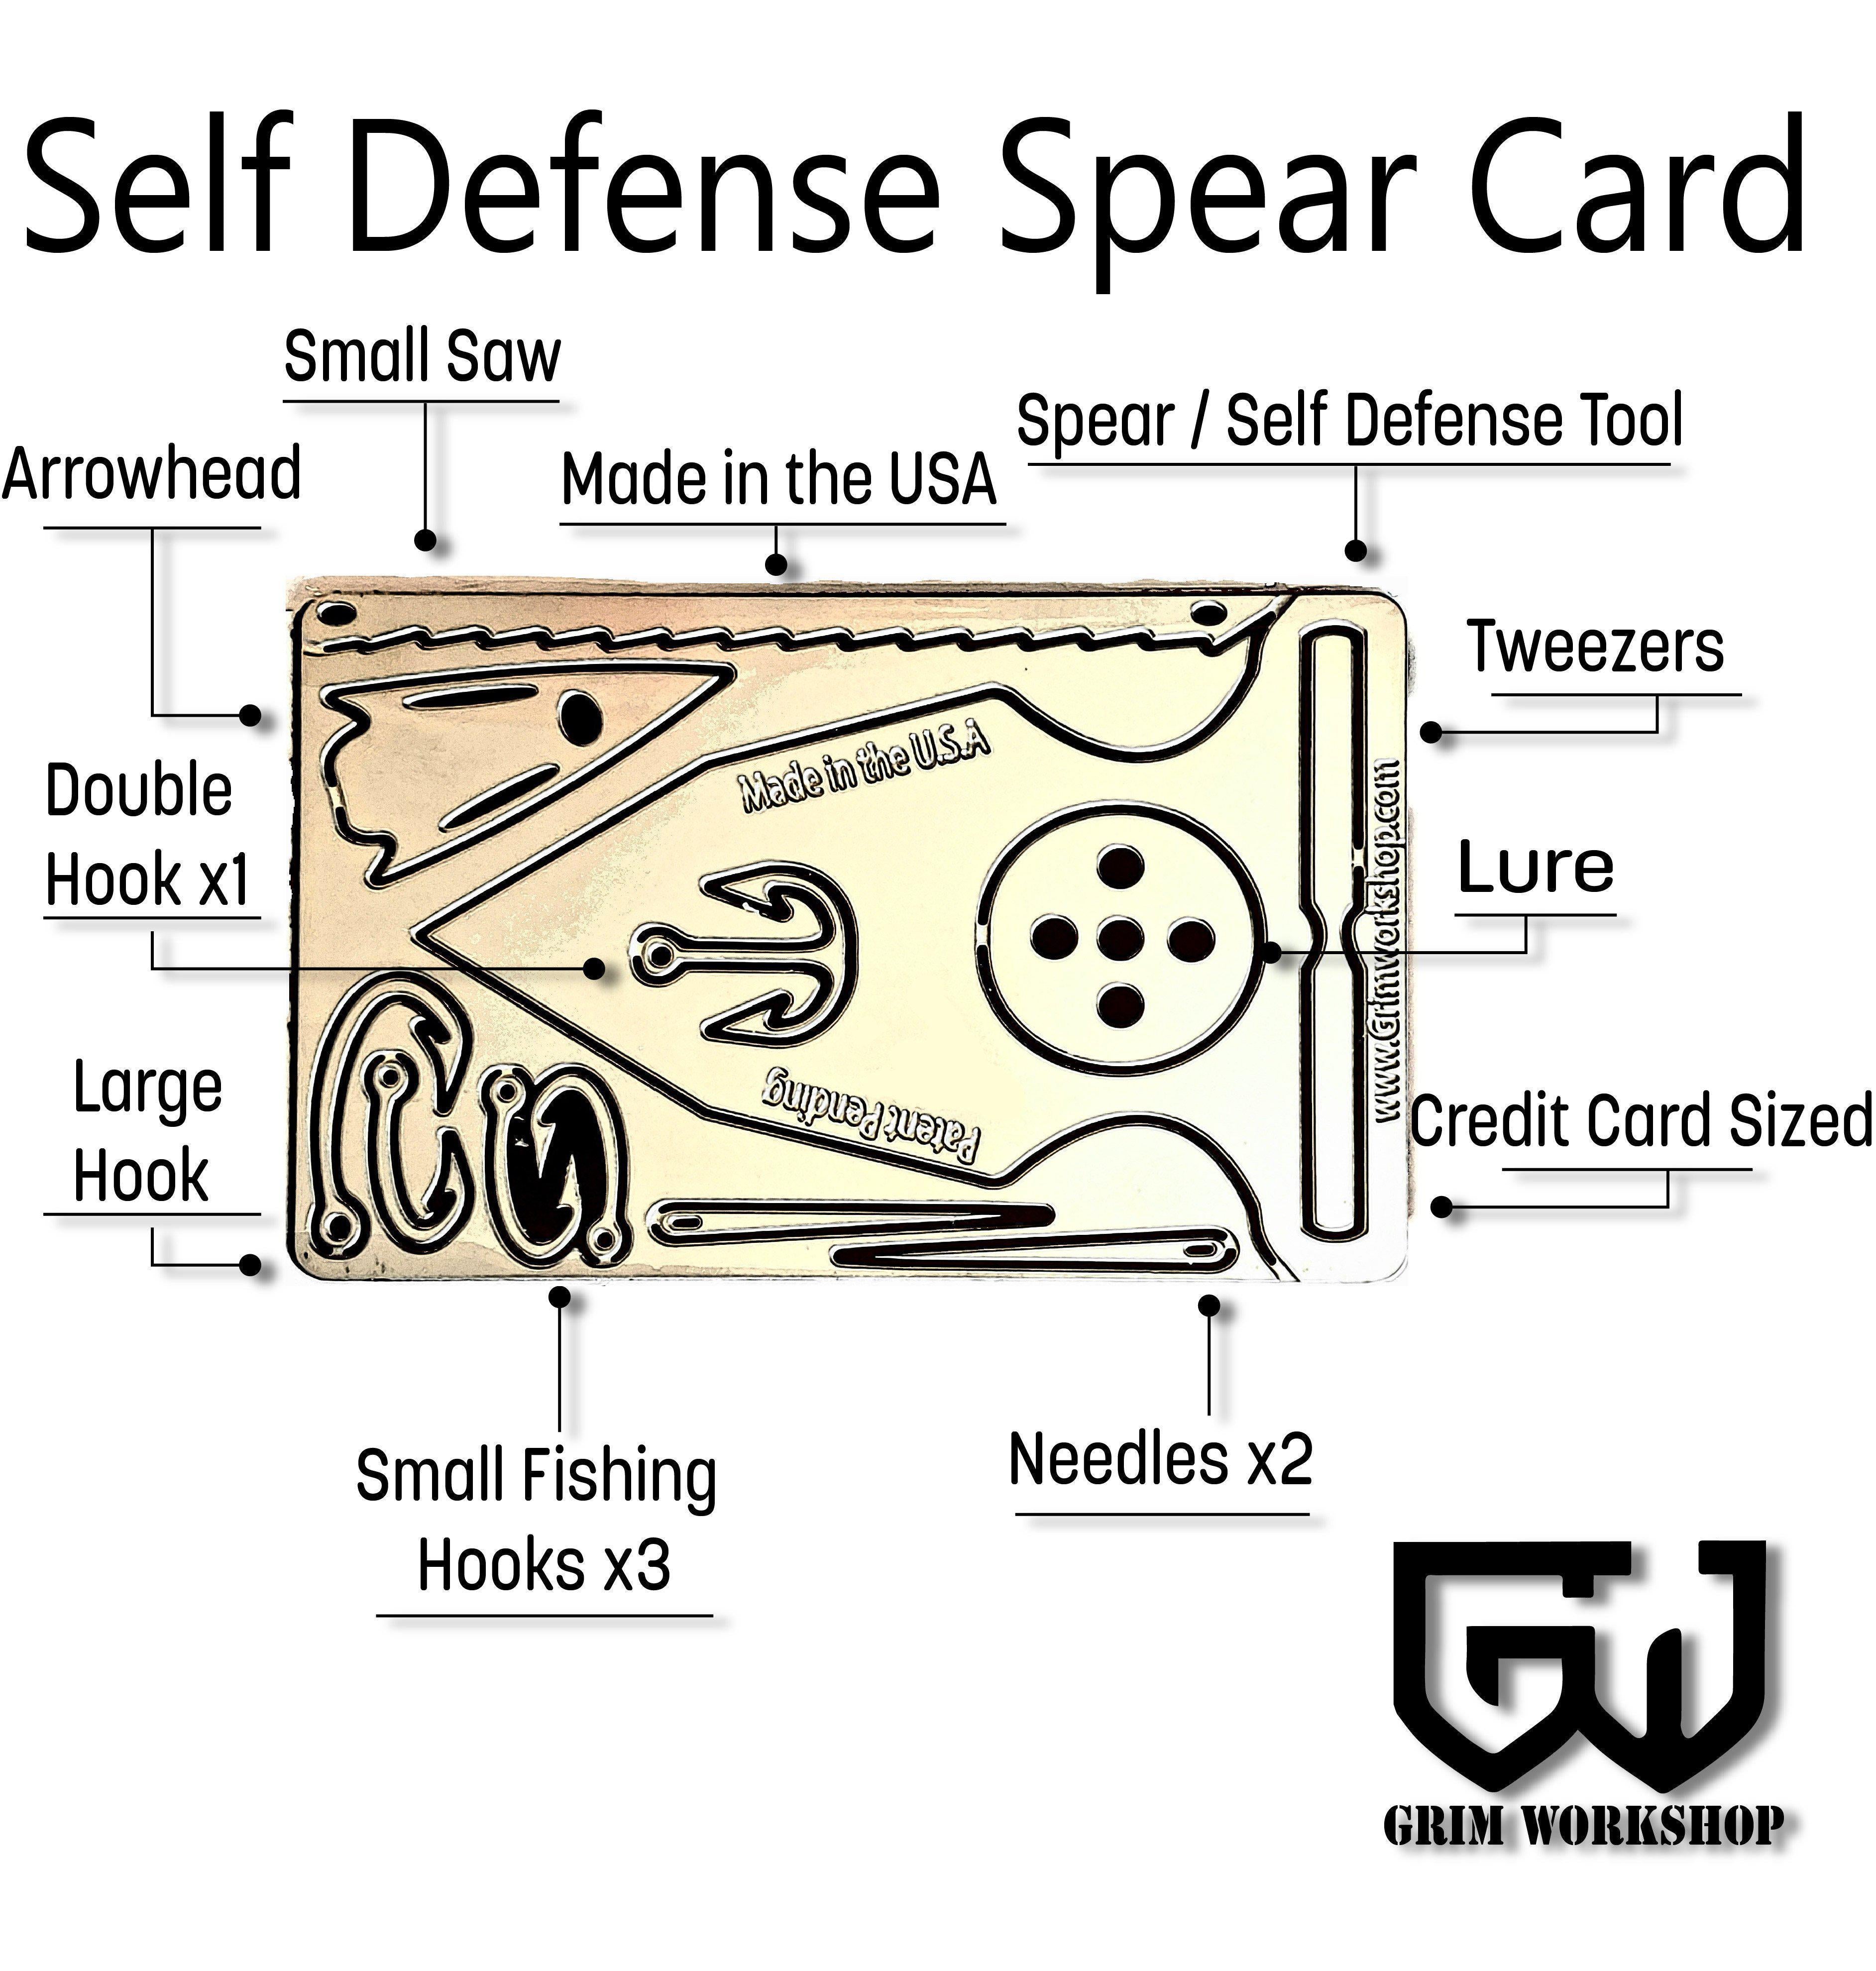 Spear Self Defense Credit Card Tool